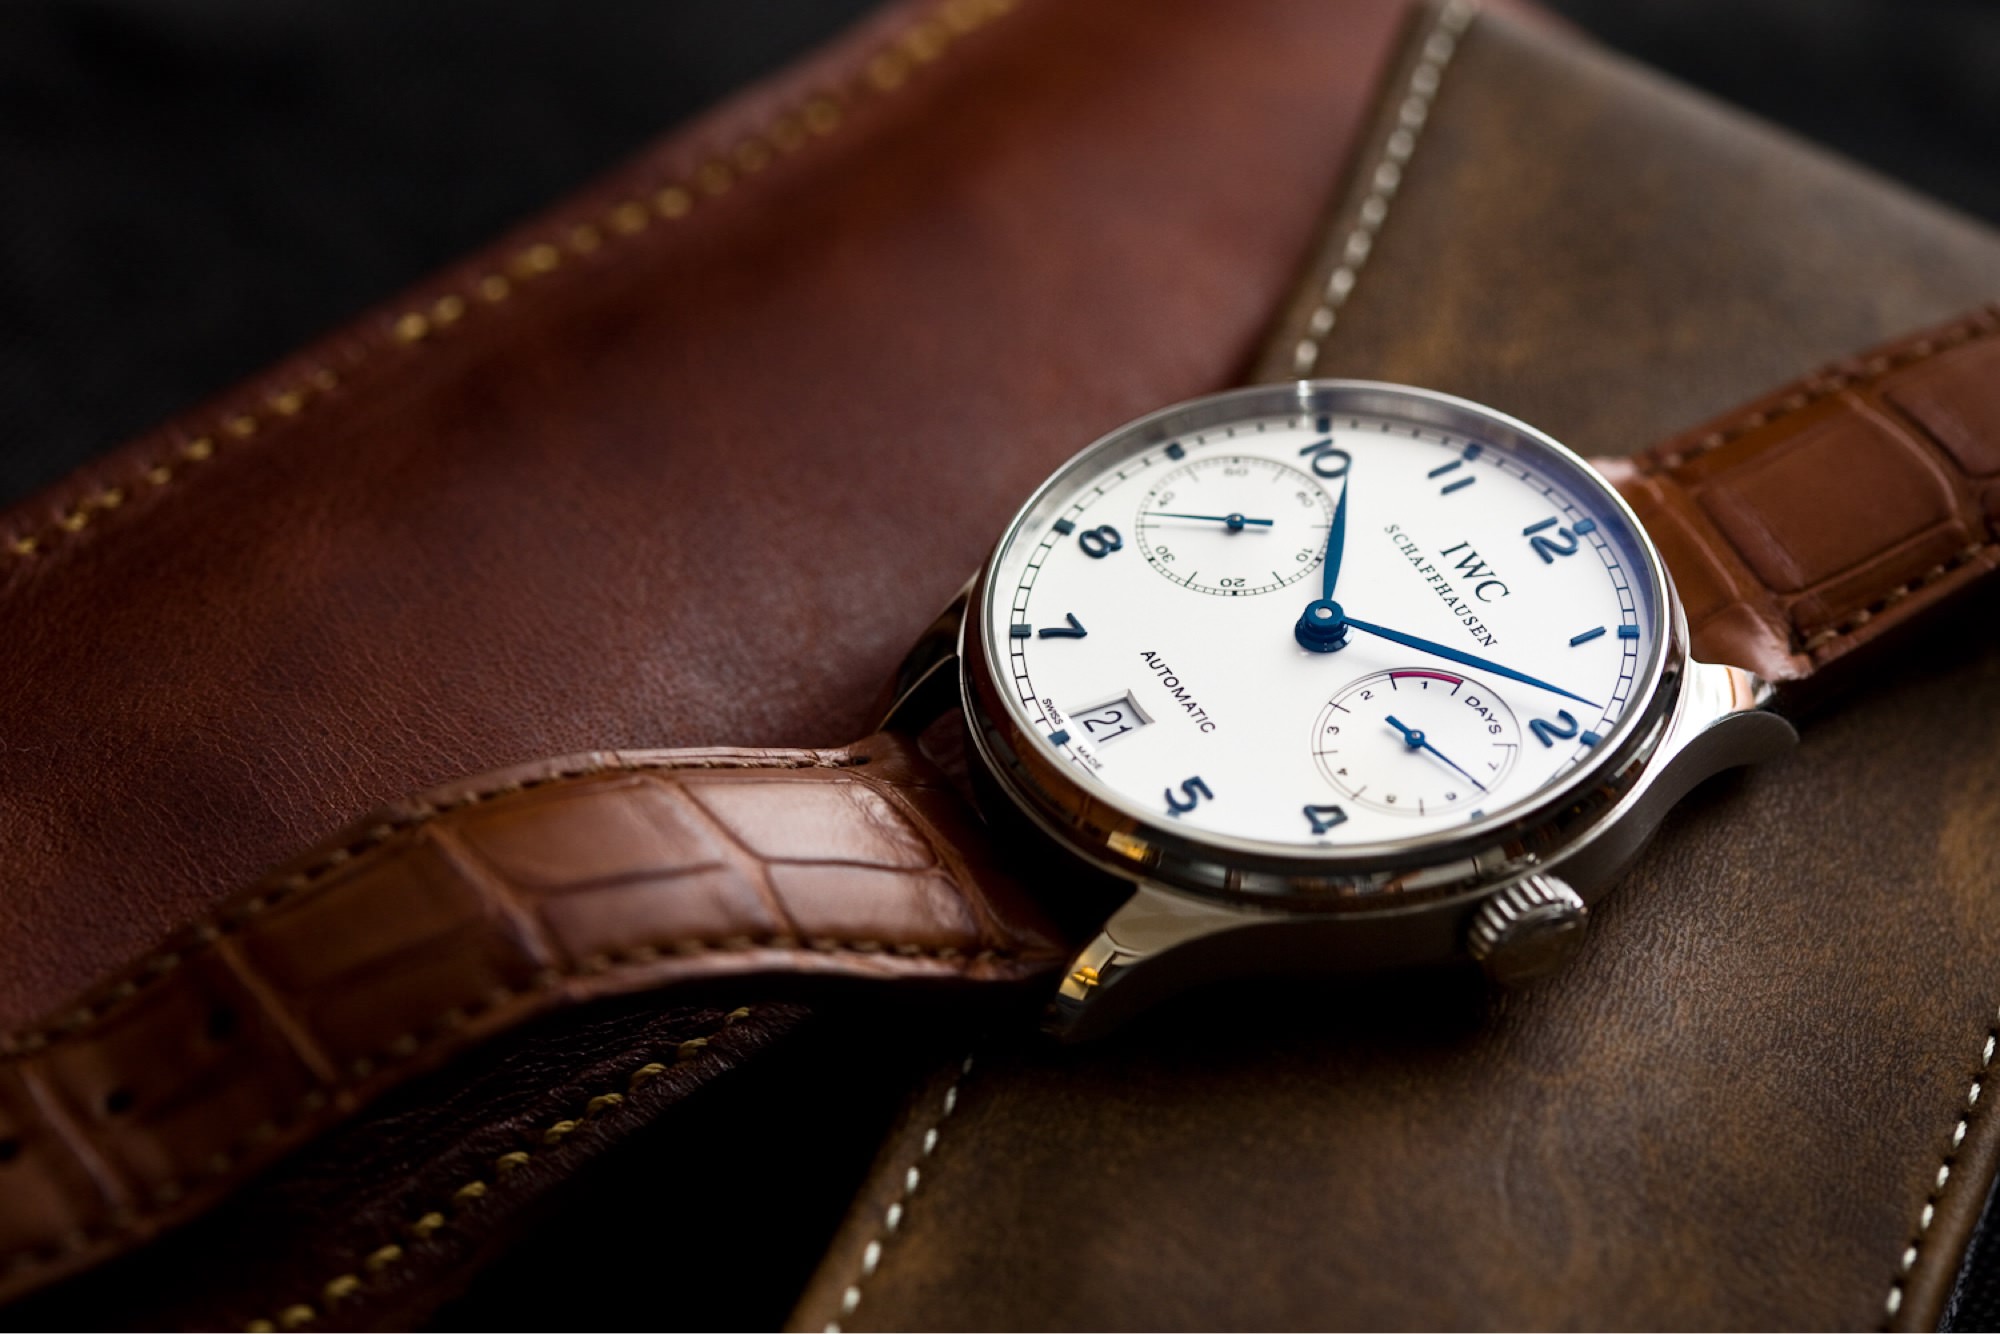 General 2000x1334 watch IWC books leather clocks wristwatch numbers technology